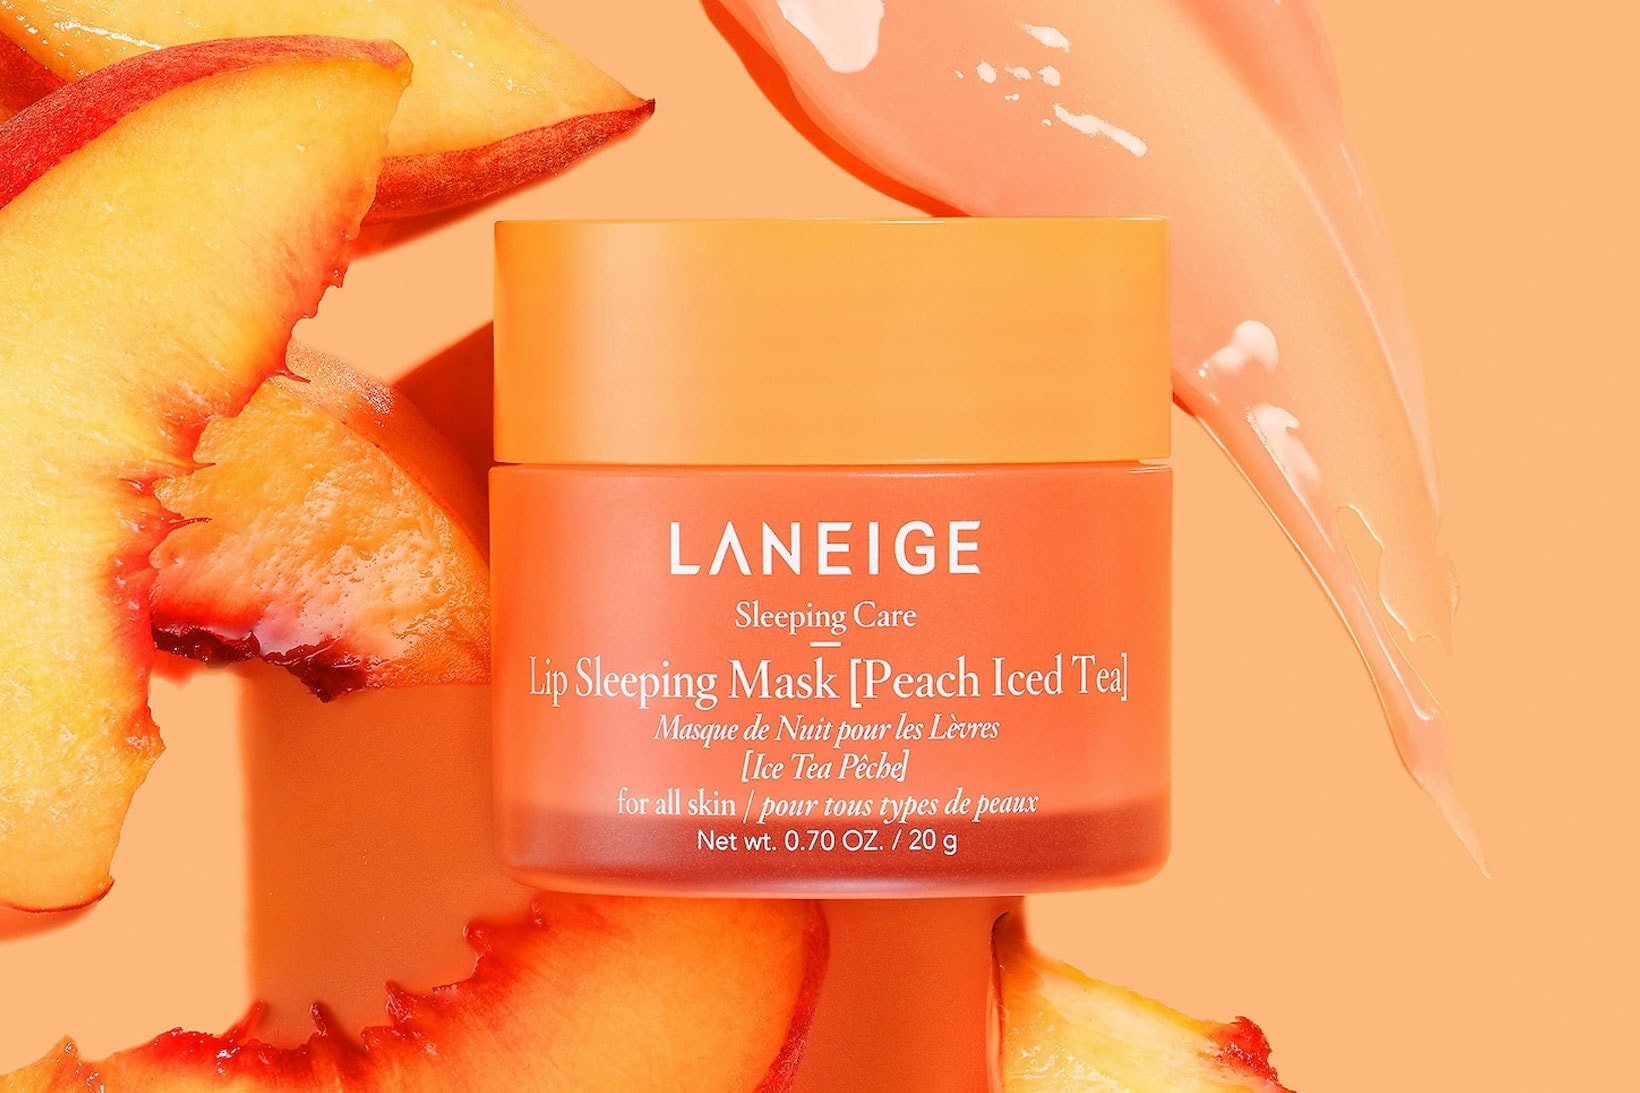 laneige lip sleeping mask peach iced tea orange bottle fruit